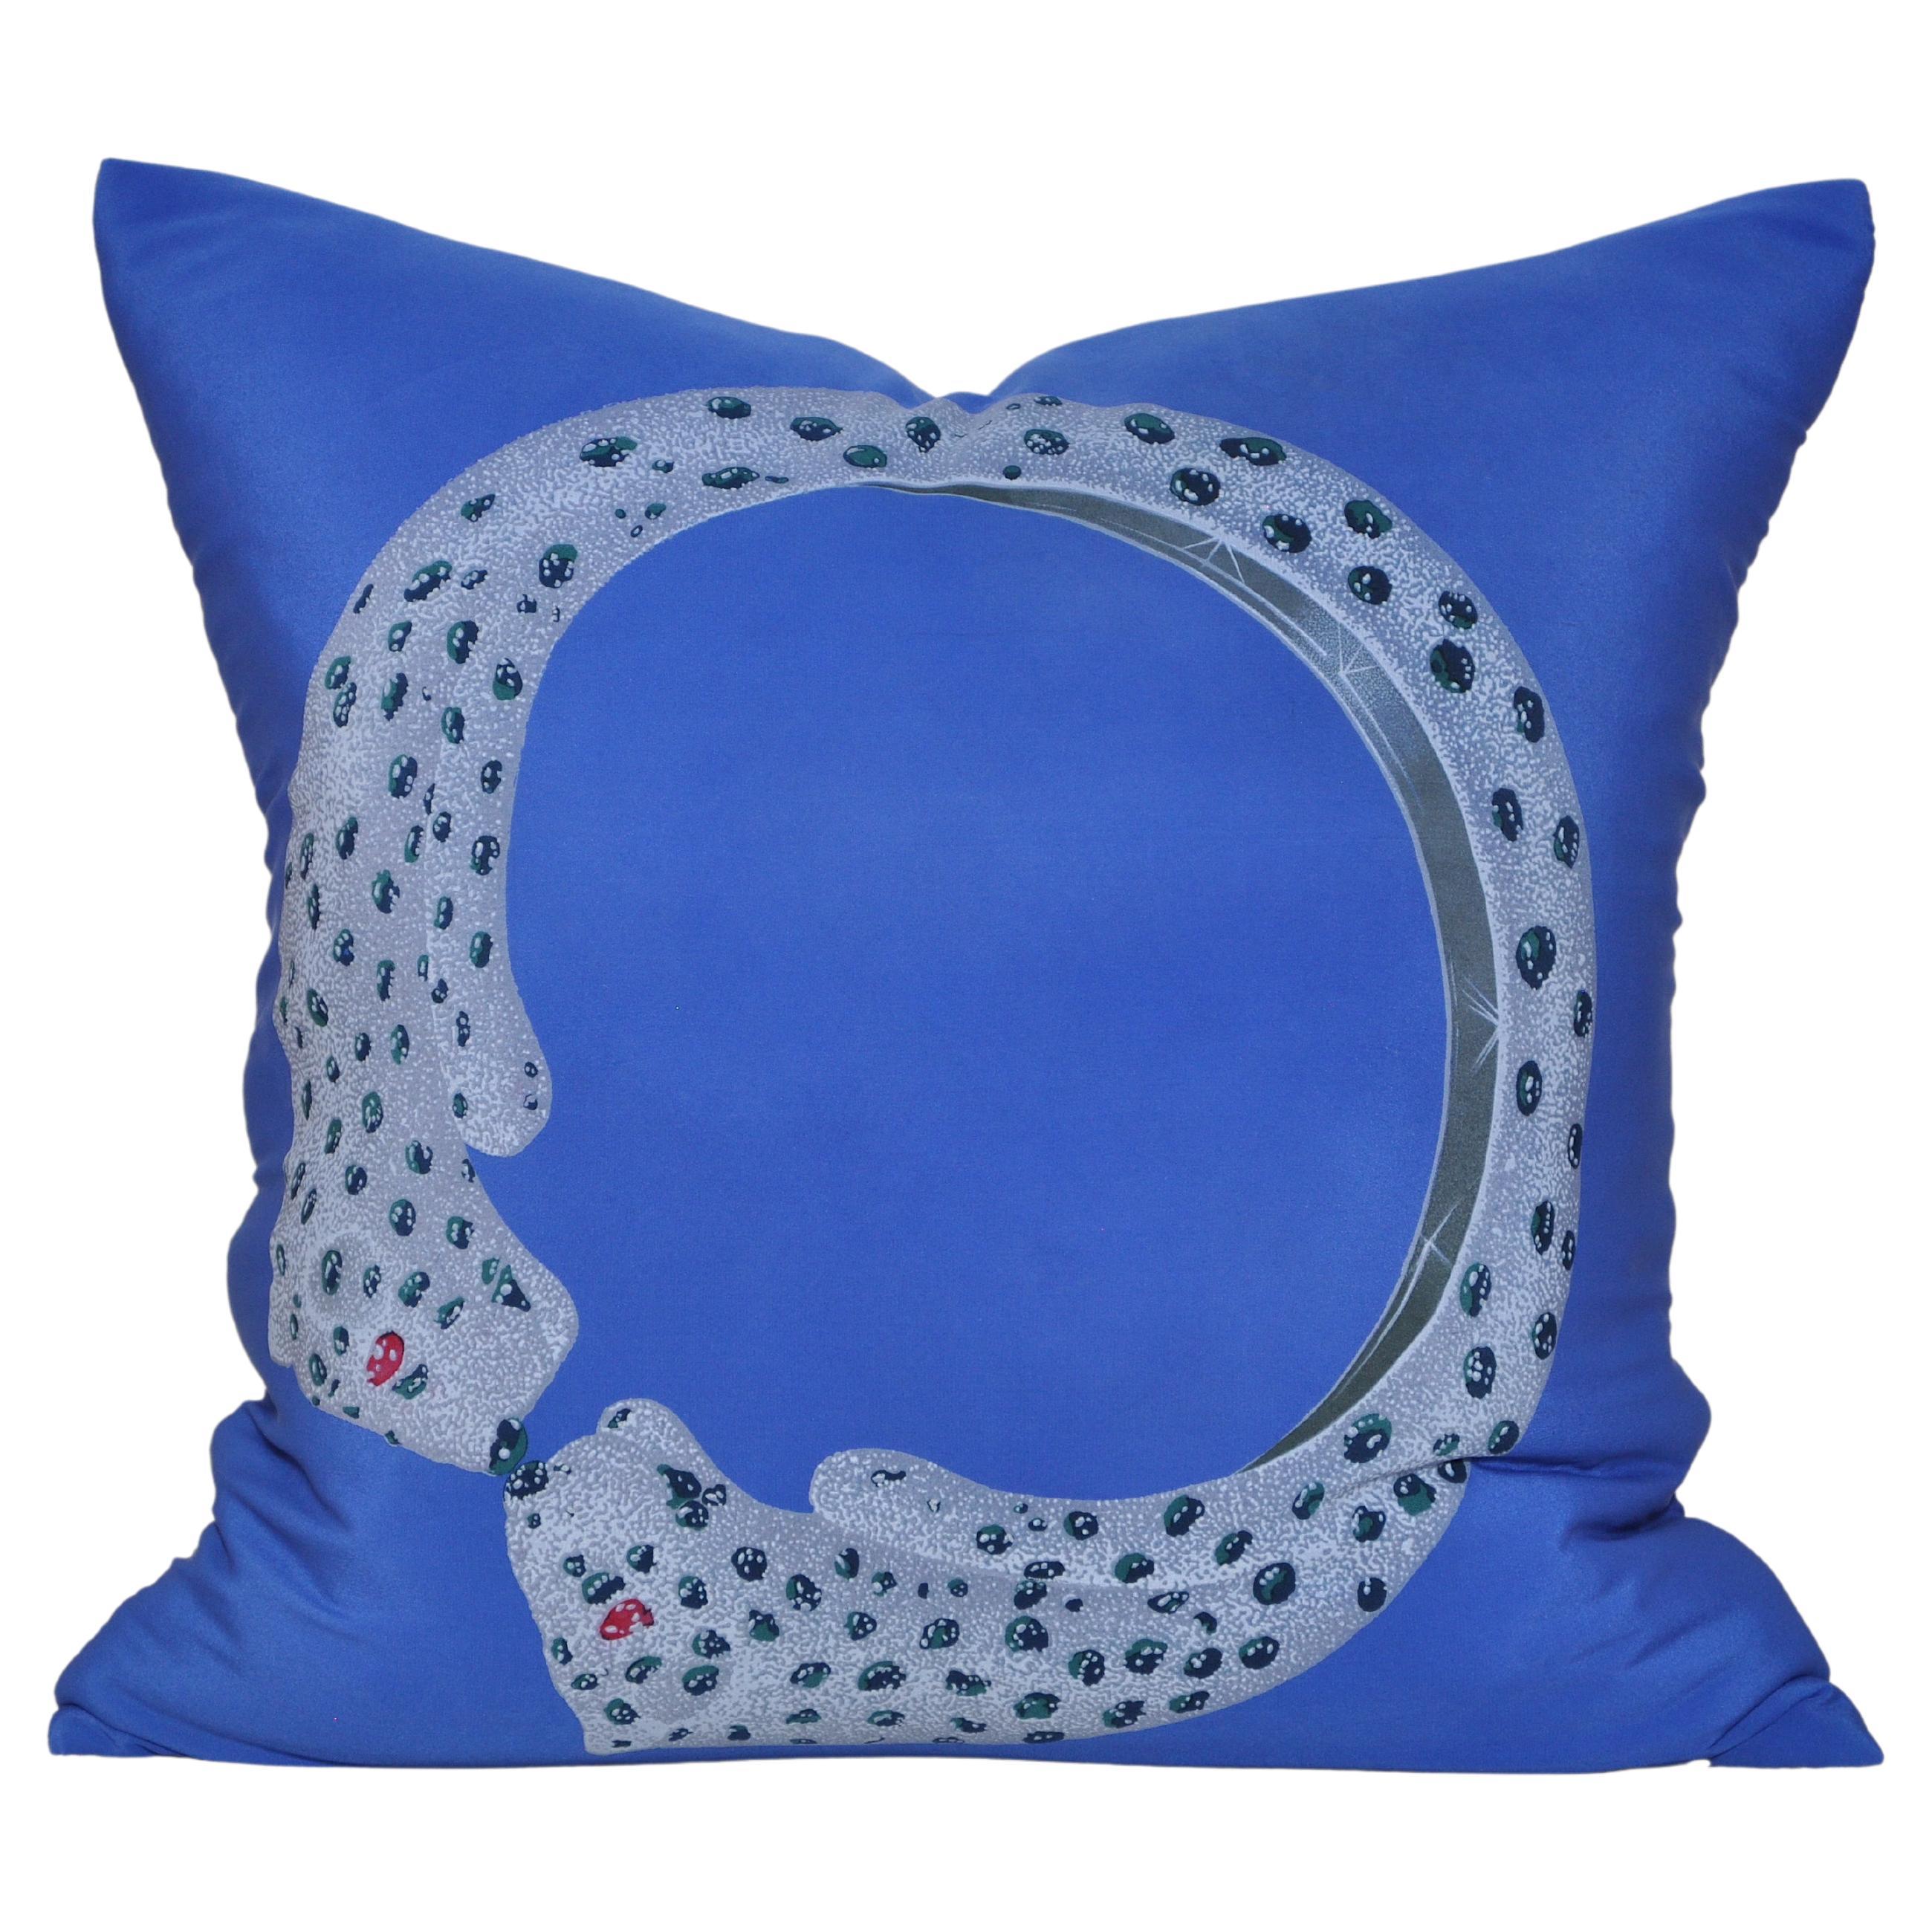 Vintage French Cartier Panther Bracelet Silk Scarf Sapphire Blue Linen Pillow For Sale